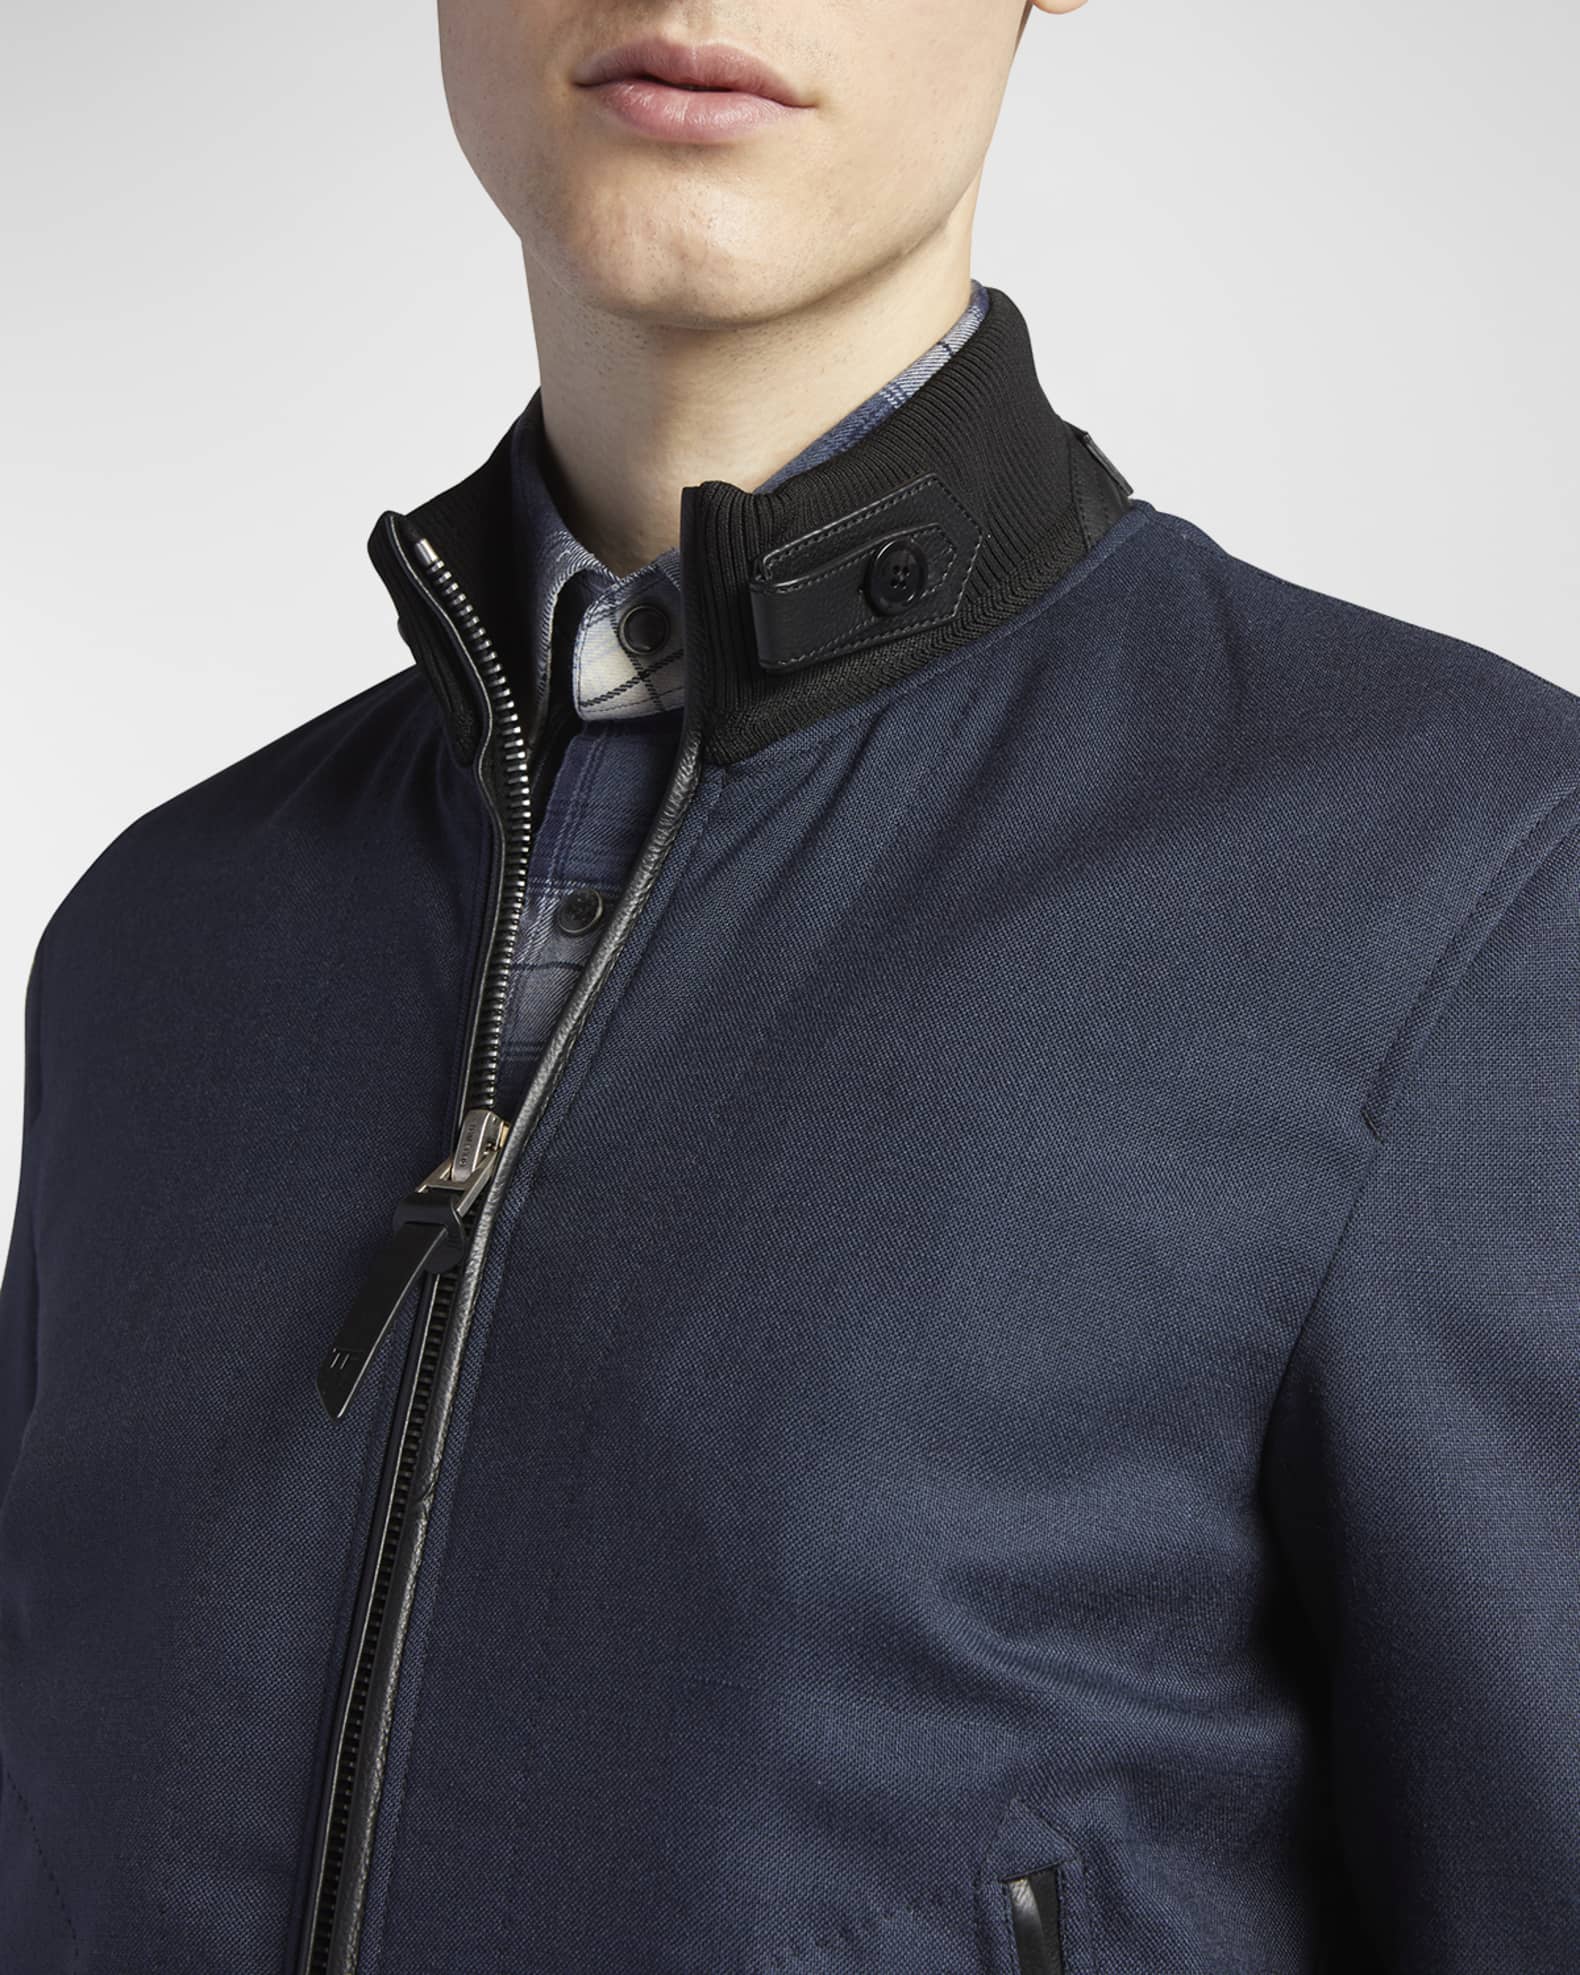 Louis Vuitton Black Wool Monogram Hooded Wrap Coat S - ShopStyle